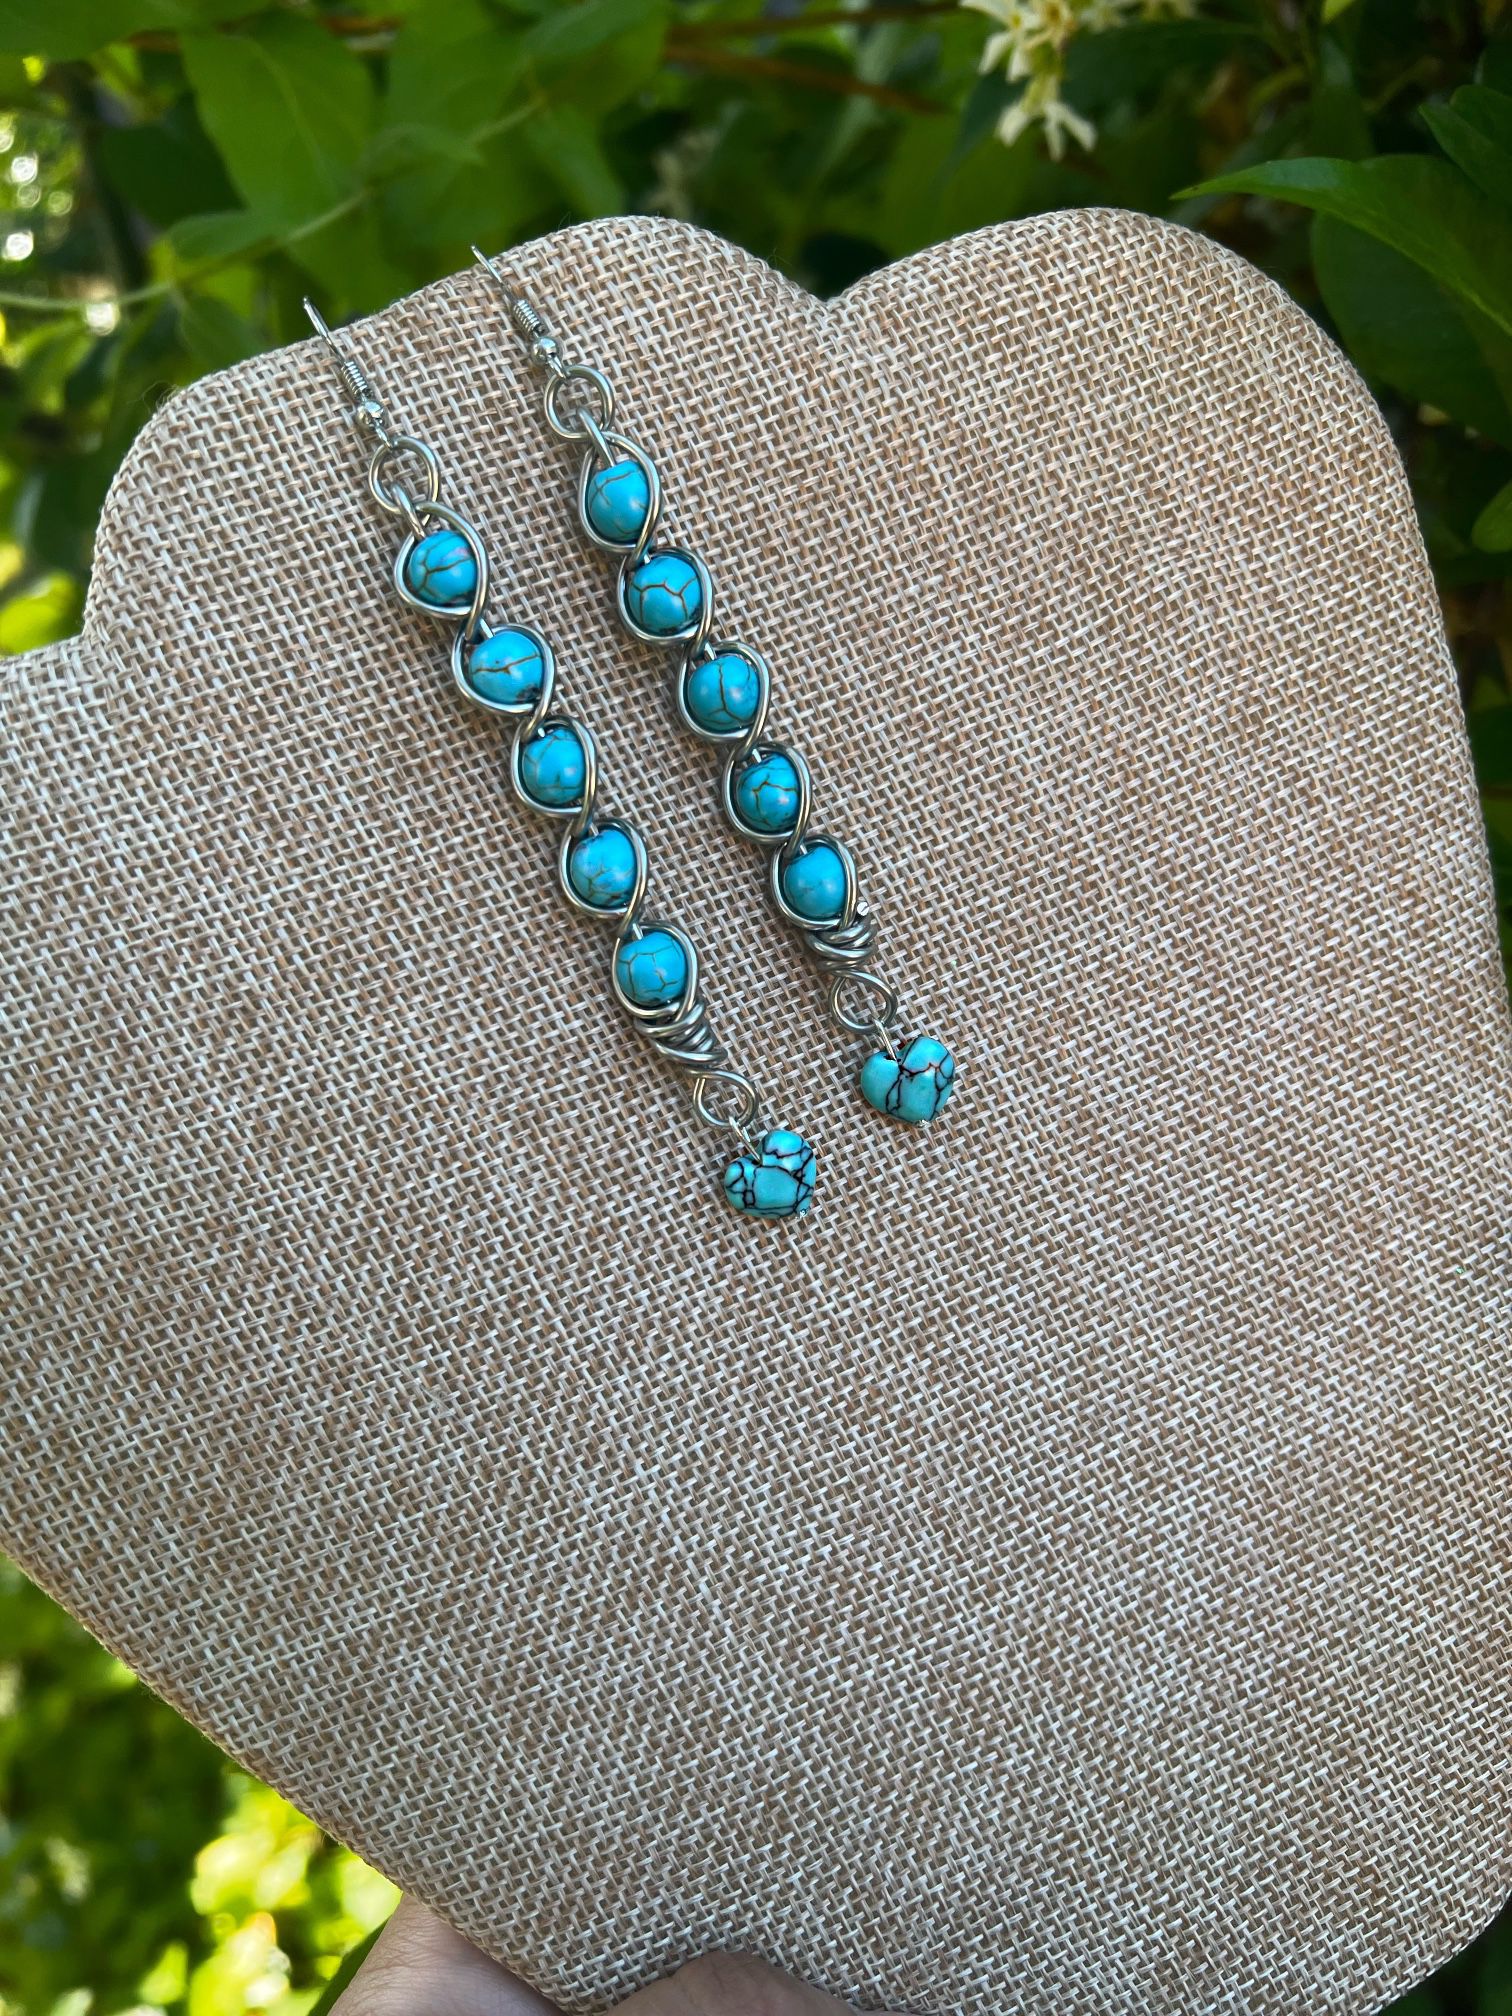 Turquoise earrings 